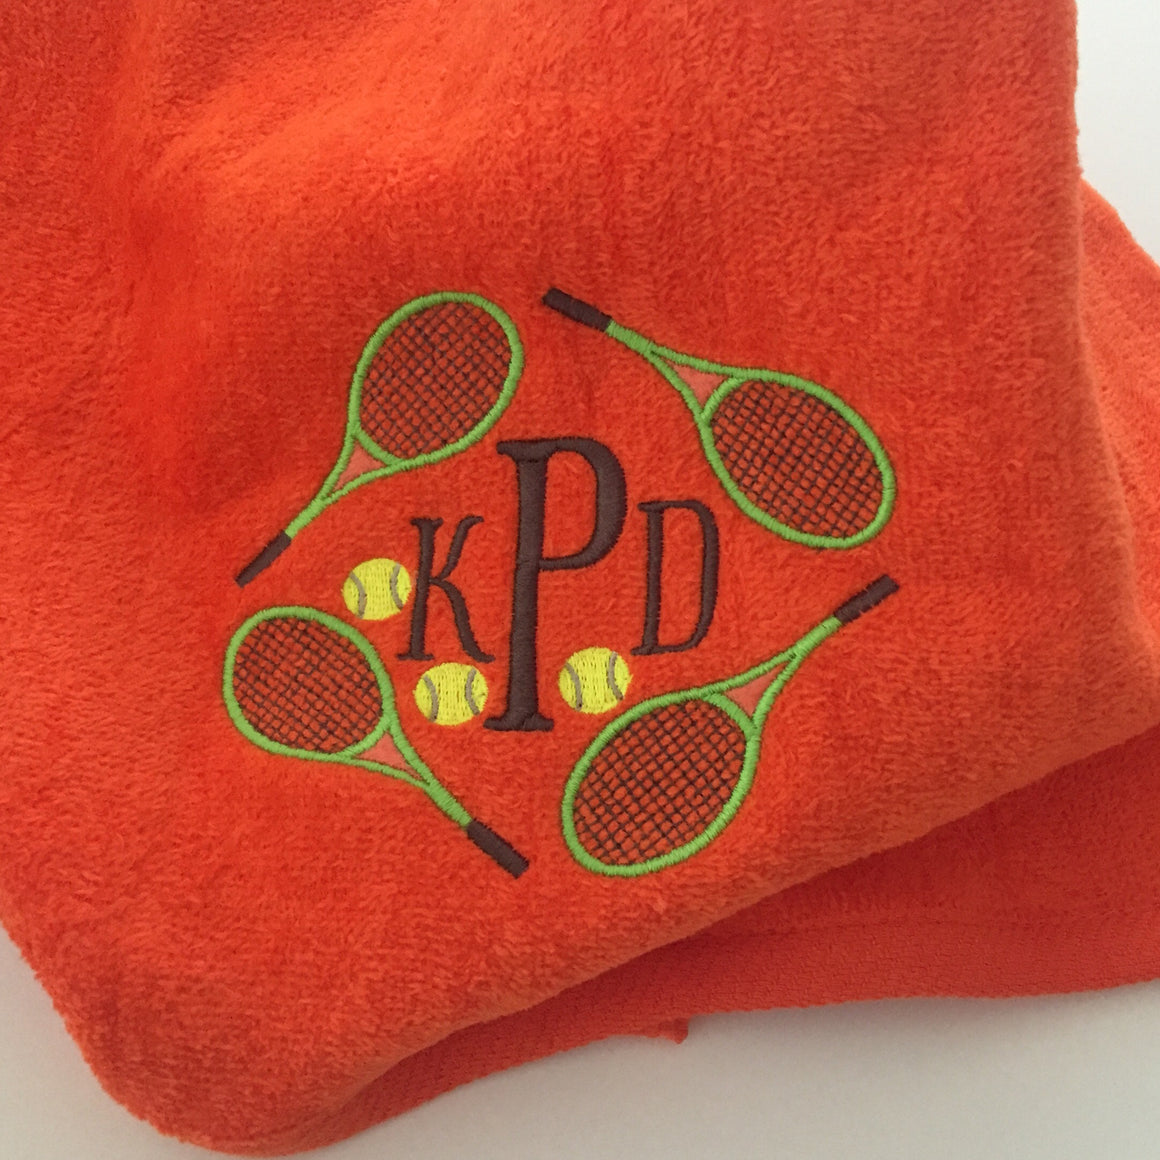 Personalized Tennis Captain Banquet Gift - Applique Flower Ball Ladies Sports Towel